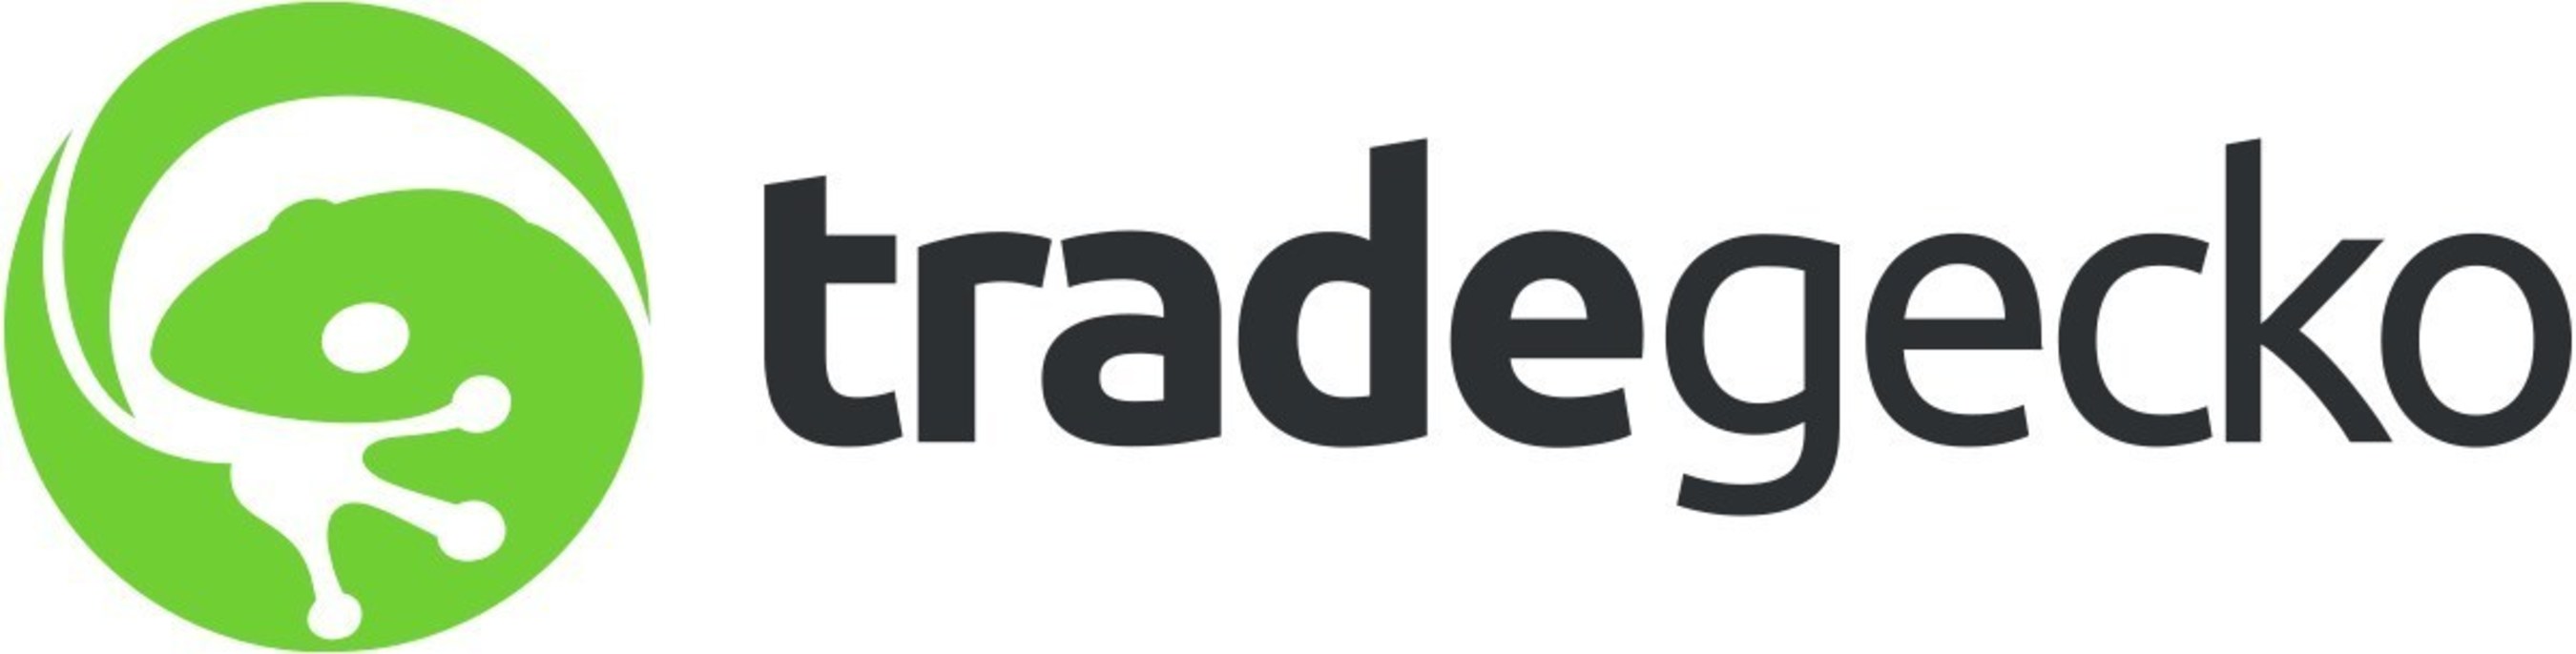 TradeGecko logo